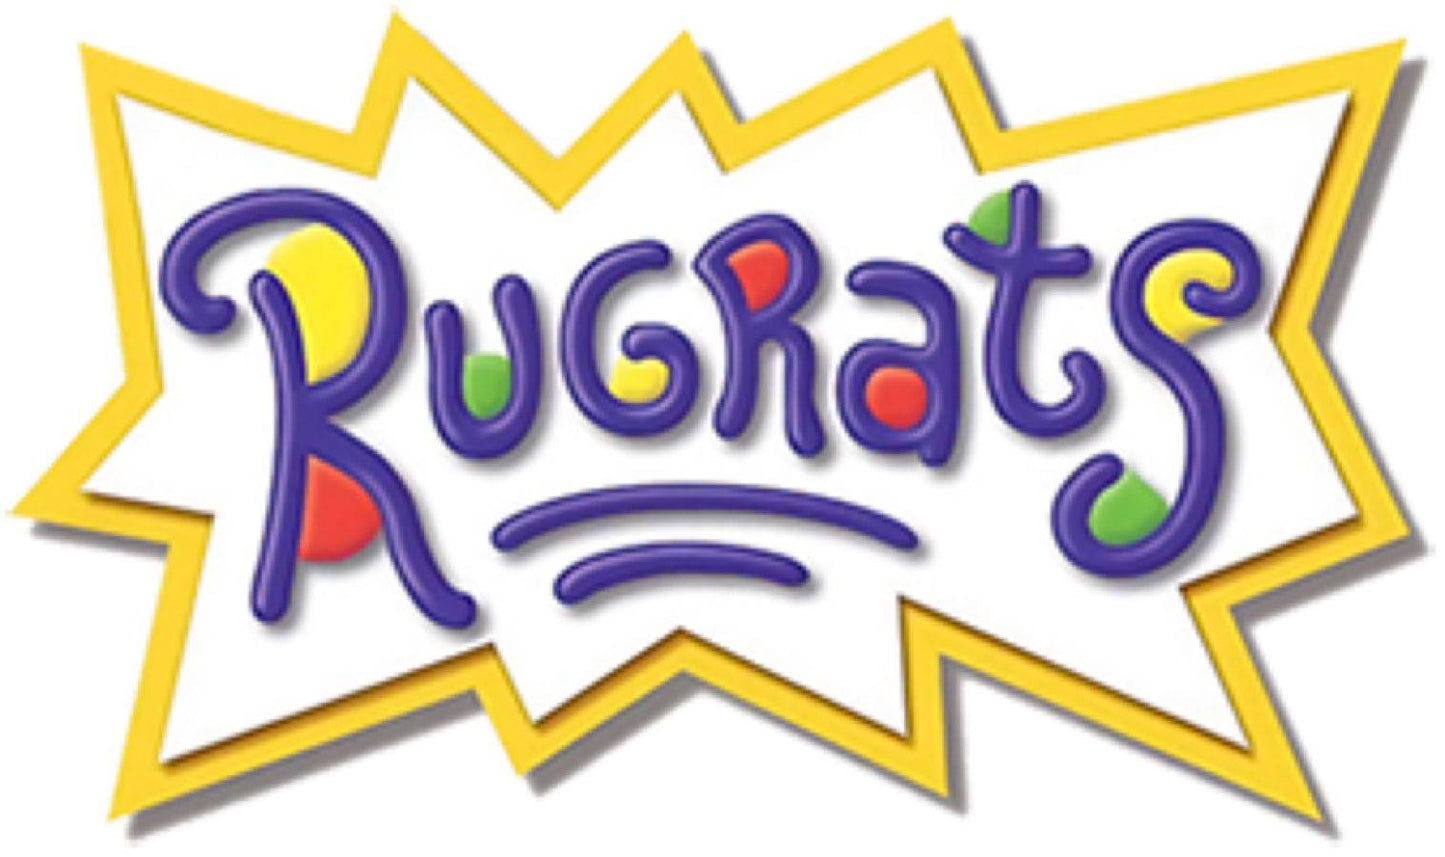 Rugrats - Reptar US Exclusive Mini Backpack